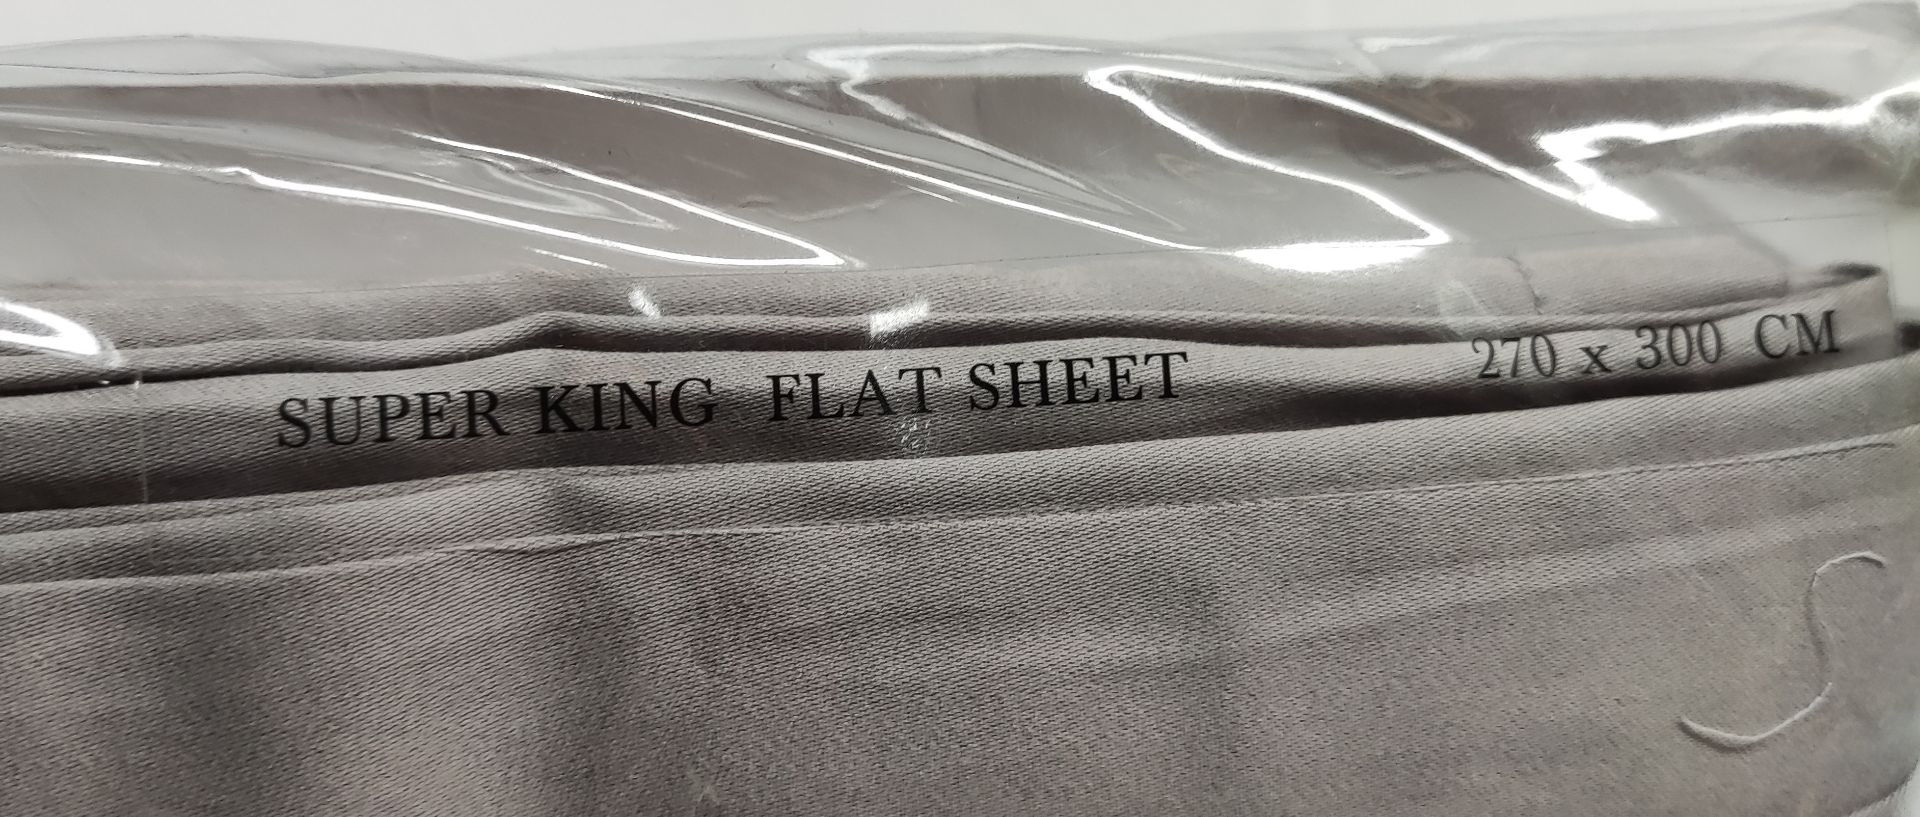 1 x HARRODS OF LONDON Brompton Super King Flat Sheet (270cm X 300cm) - Grey - Original RRP £309 - - Image 9 of 11